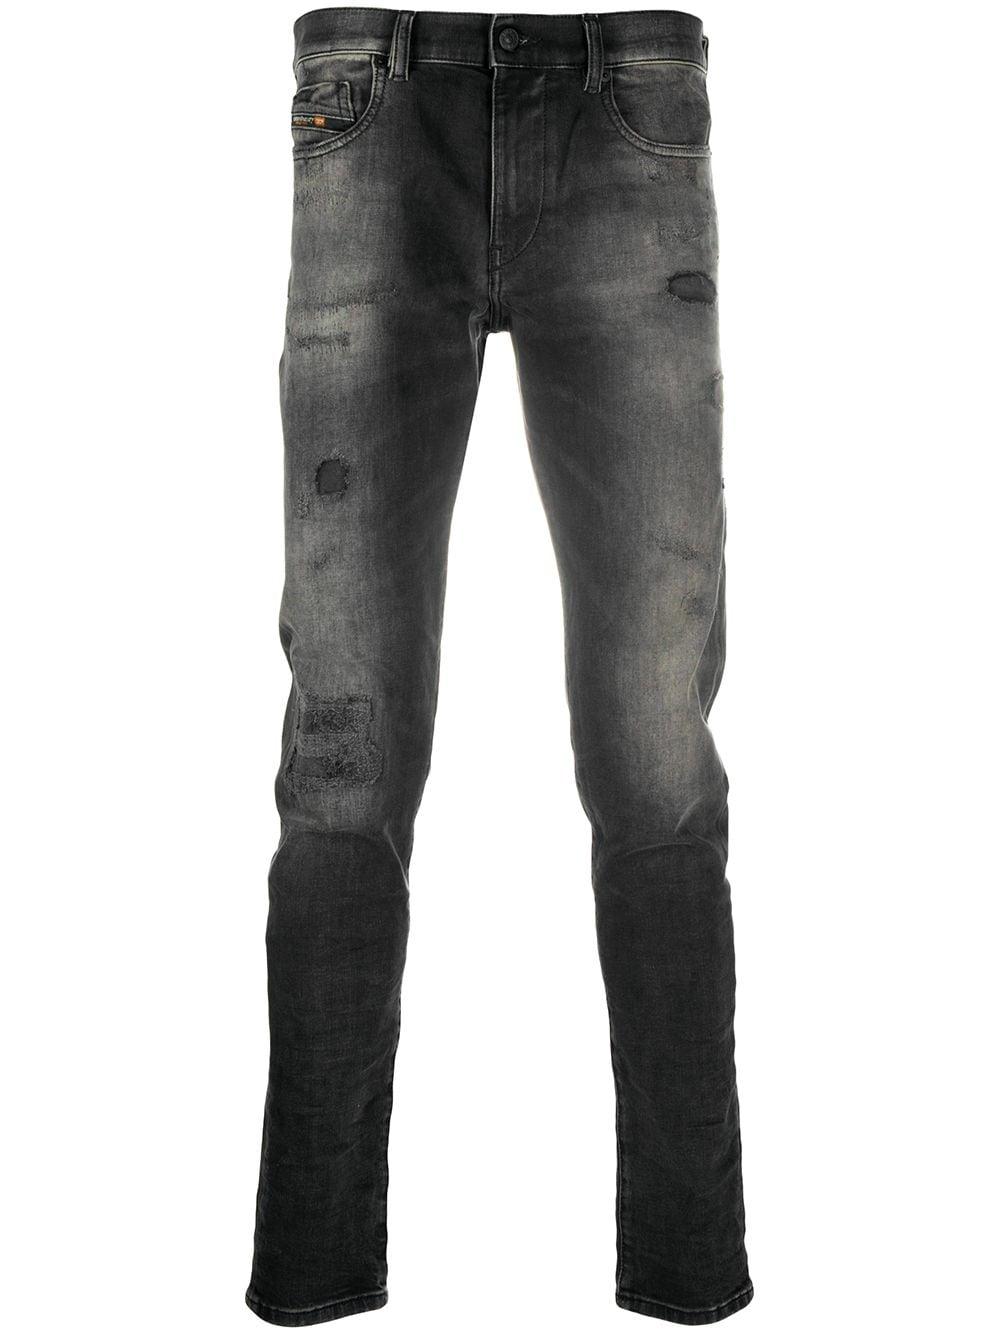 DIESEL Denim D-strukt Slim Fit Jeans in Black for Men - Lyst